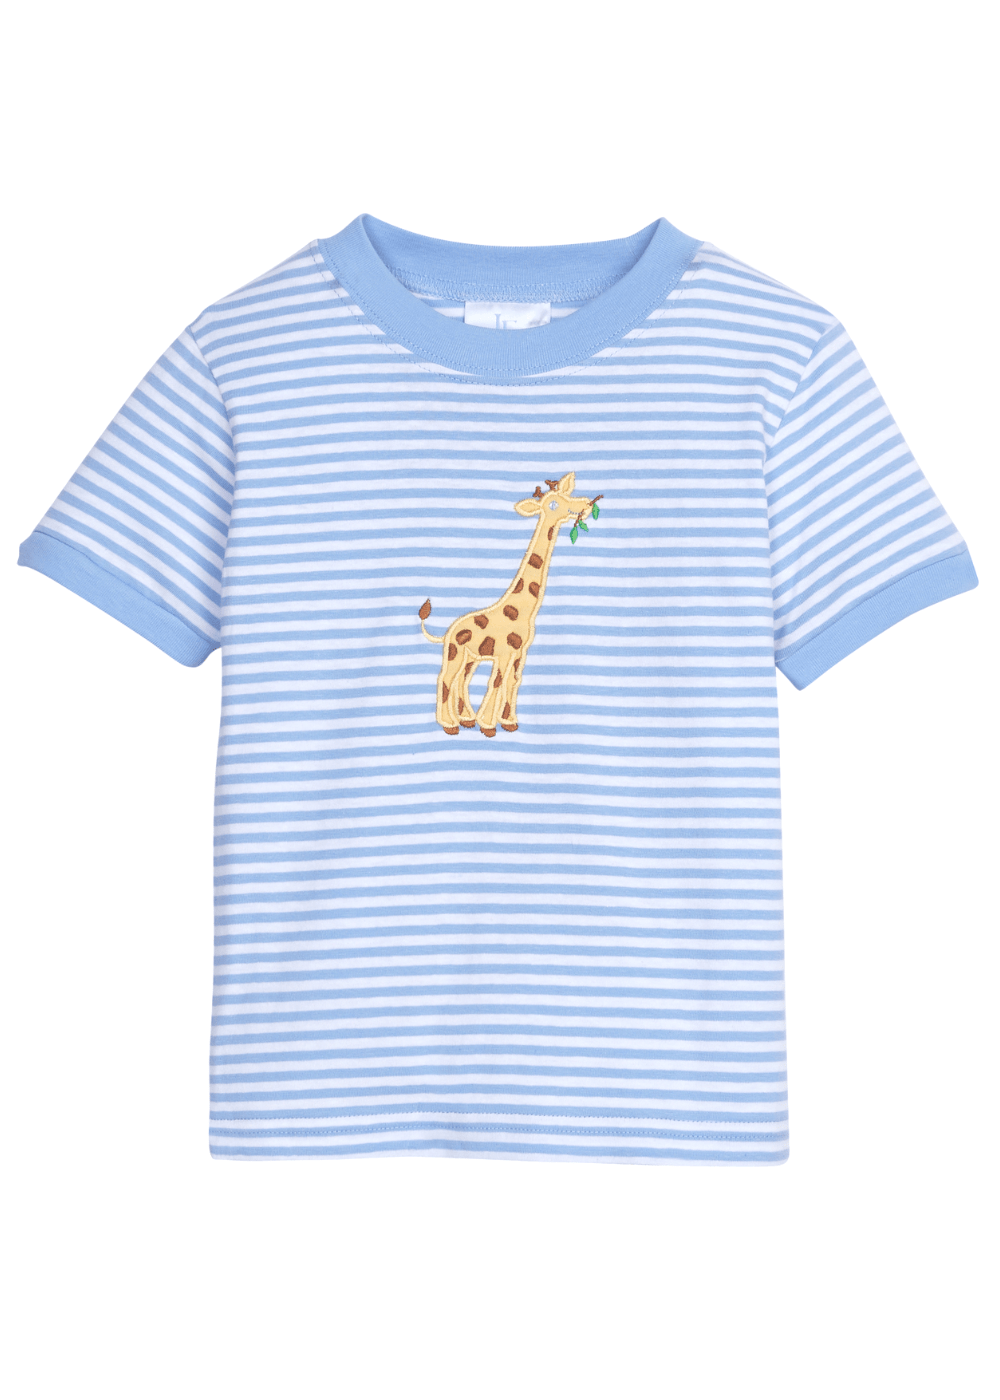 seguridadindustrialcr boy's giraffe applique t-shirt, light blue and white stripe